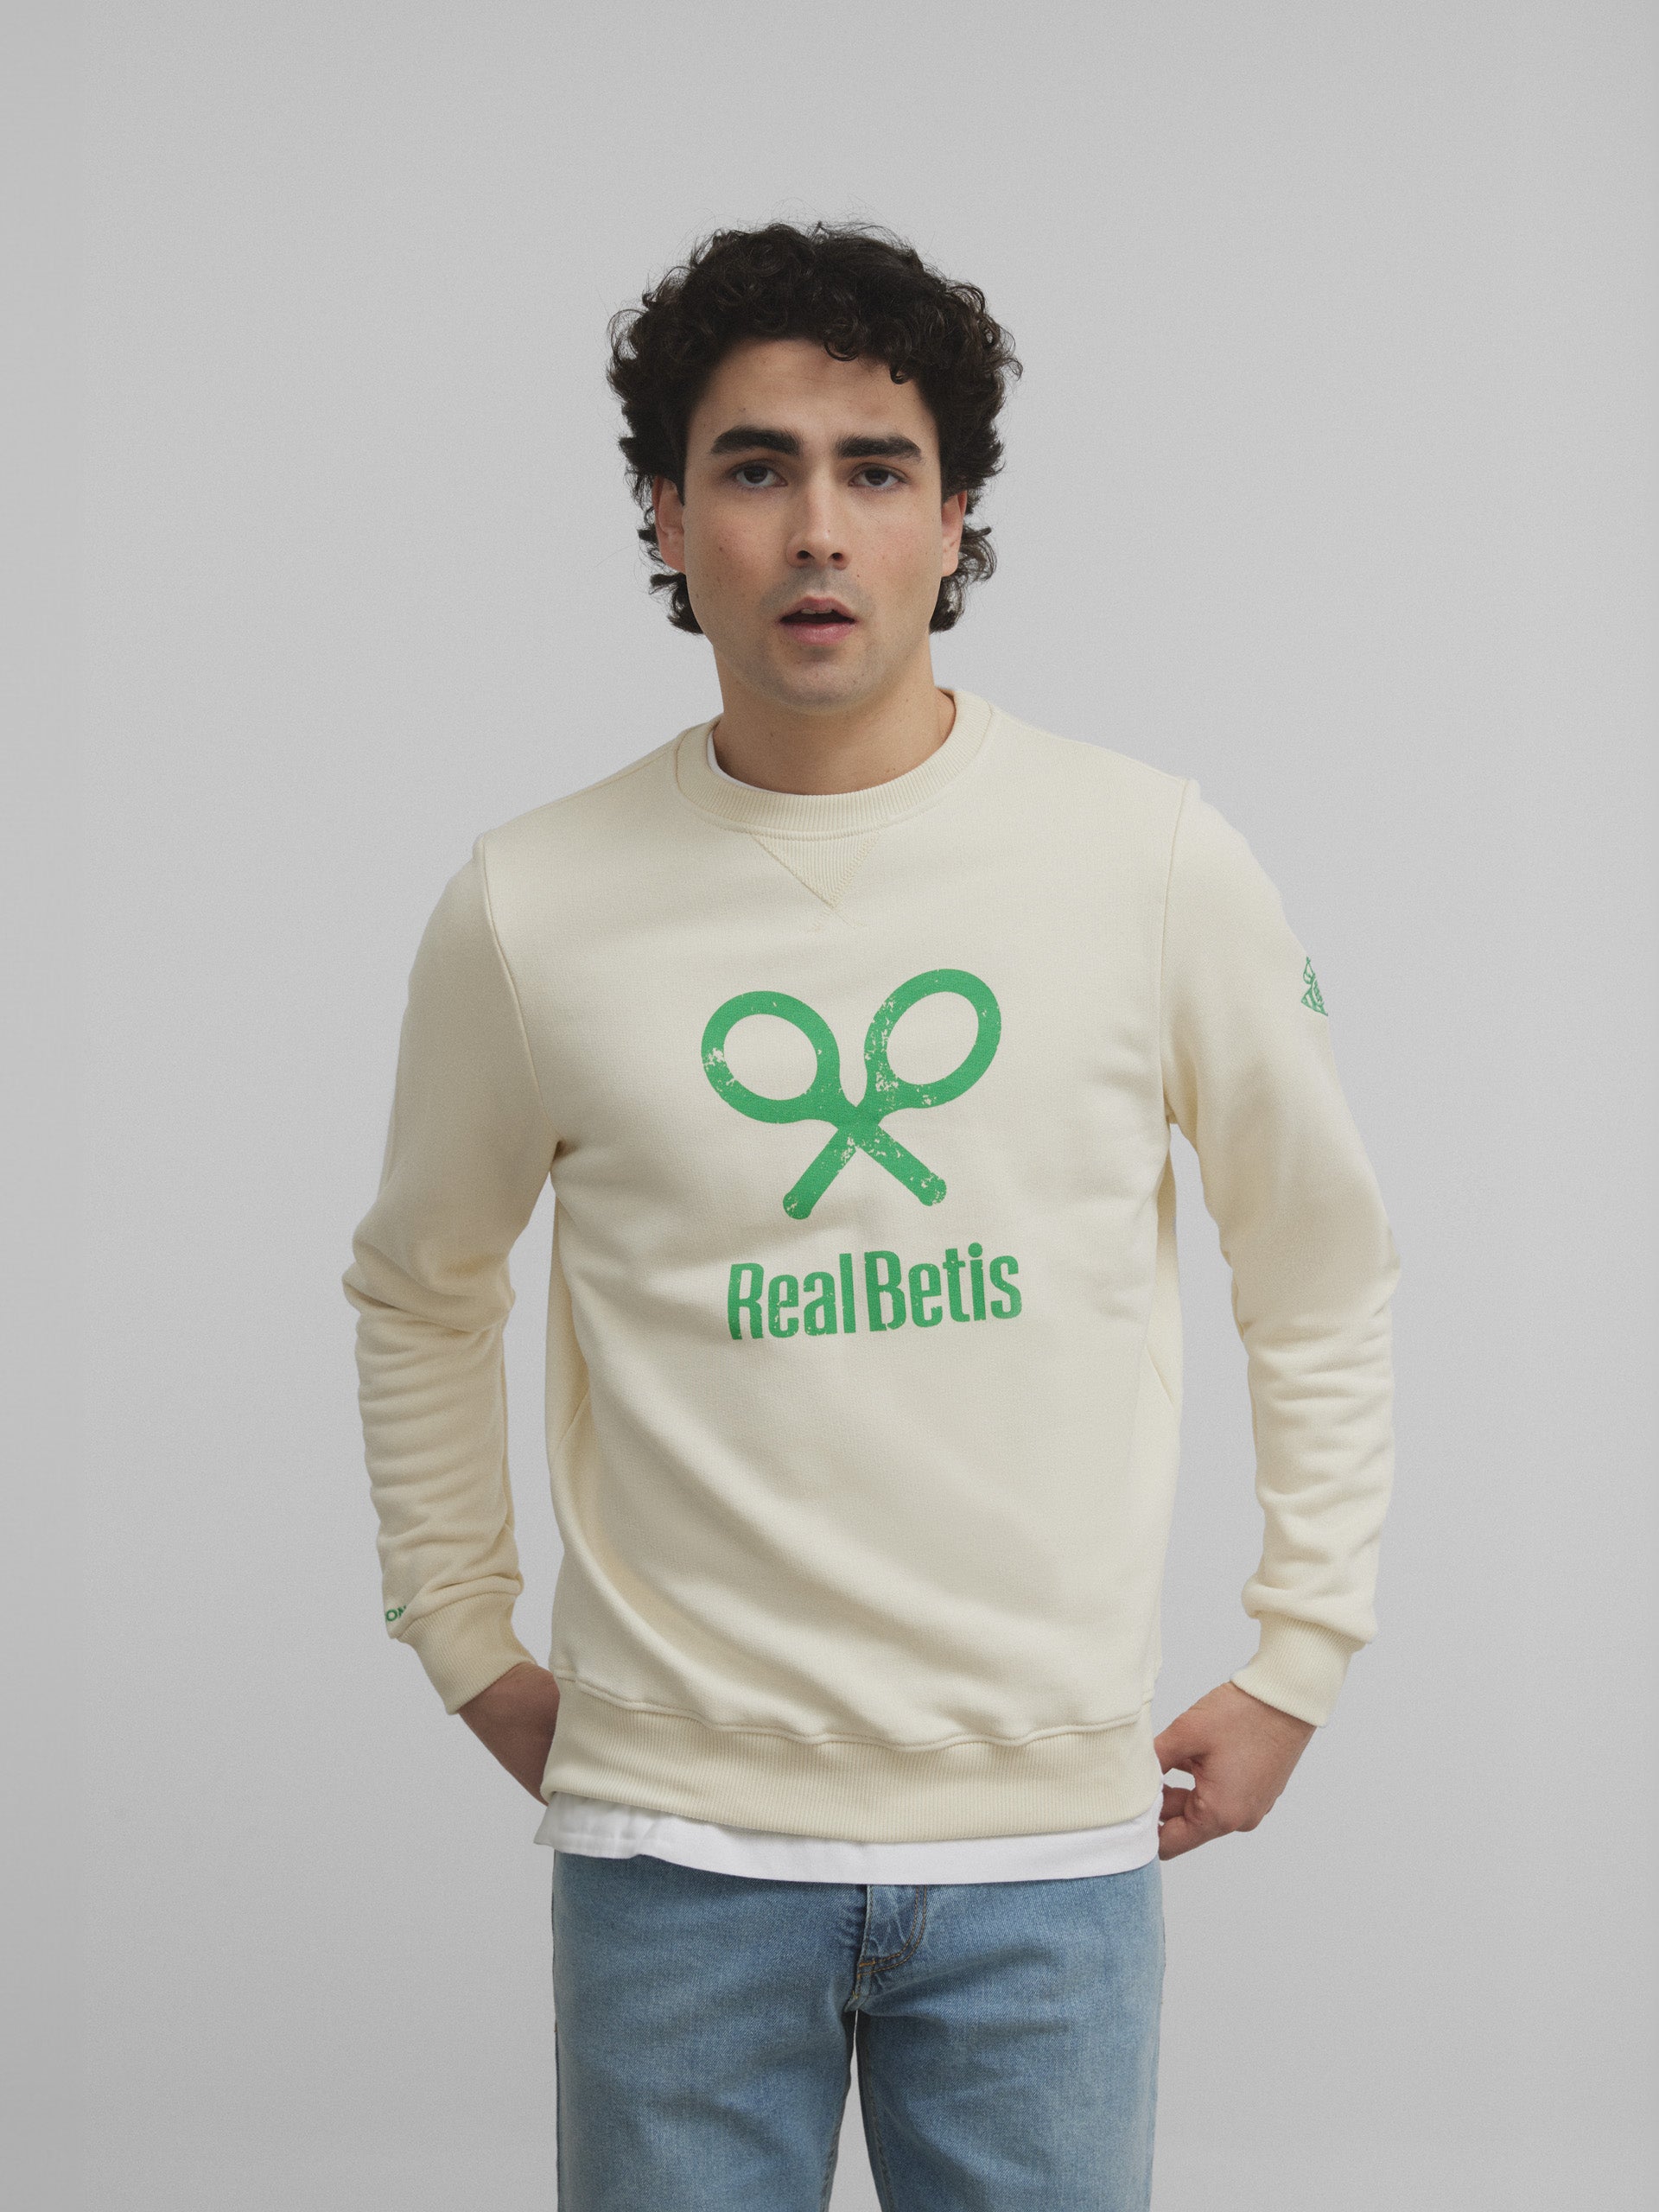 Real Betis cream racket sweatshirt